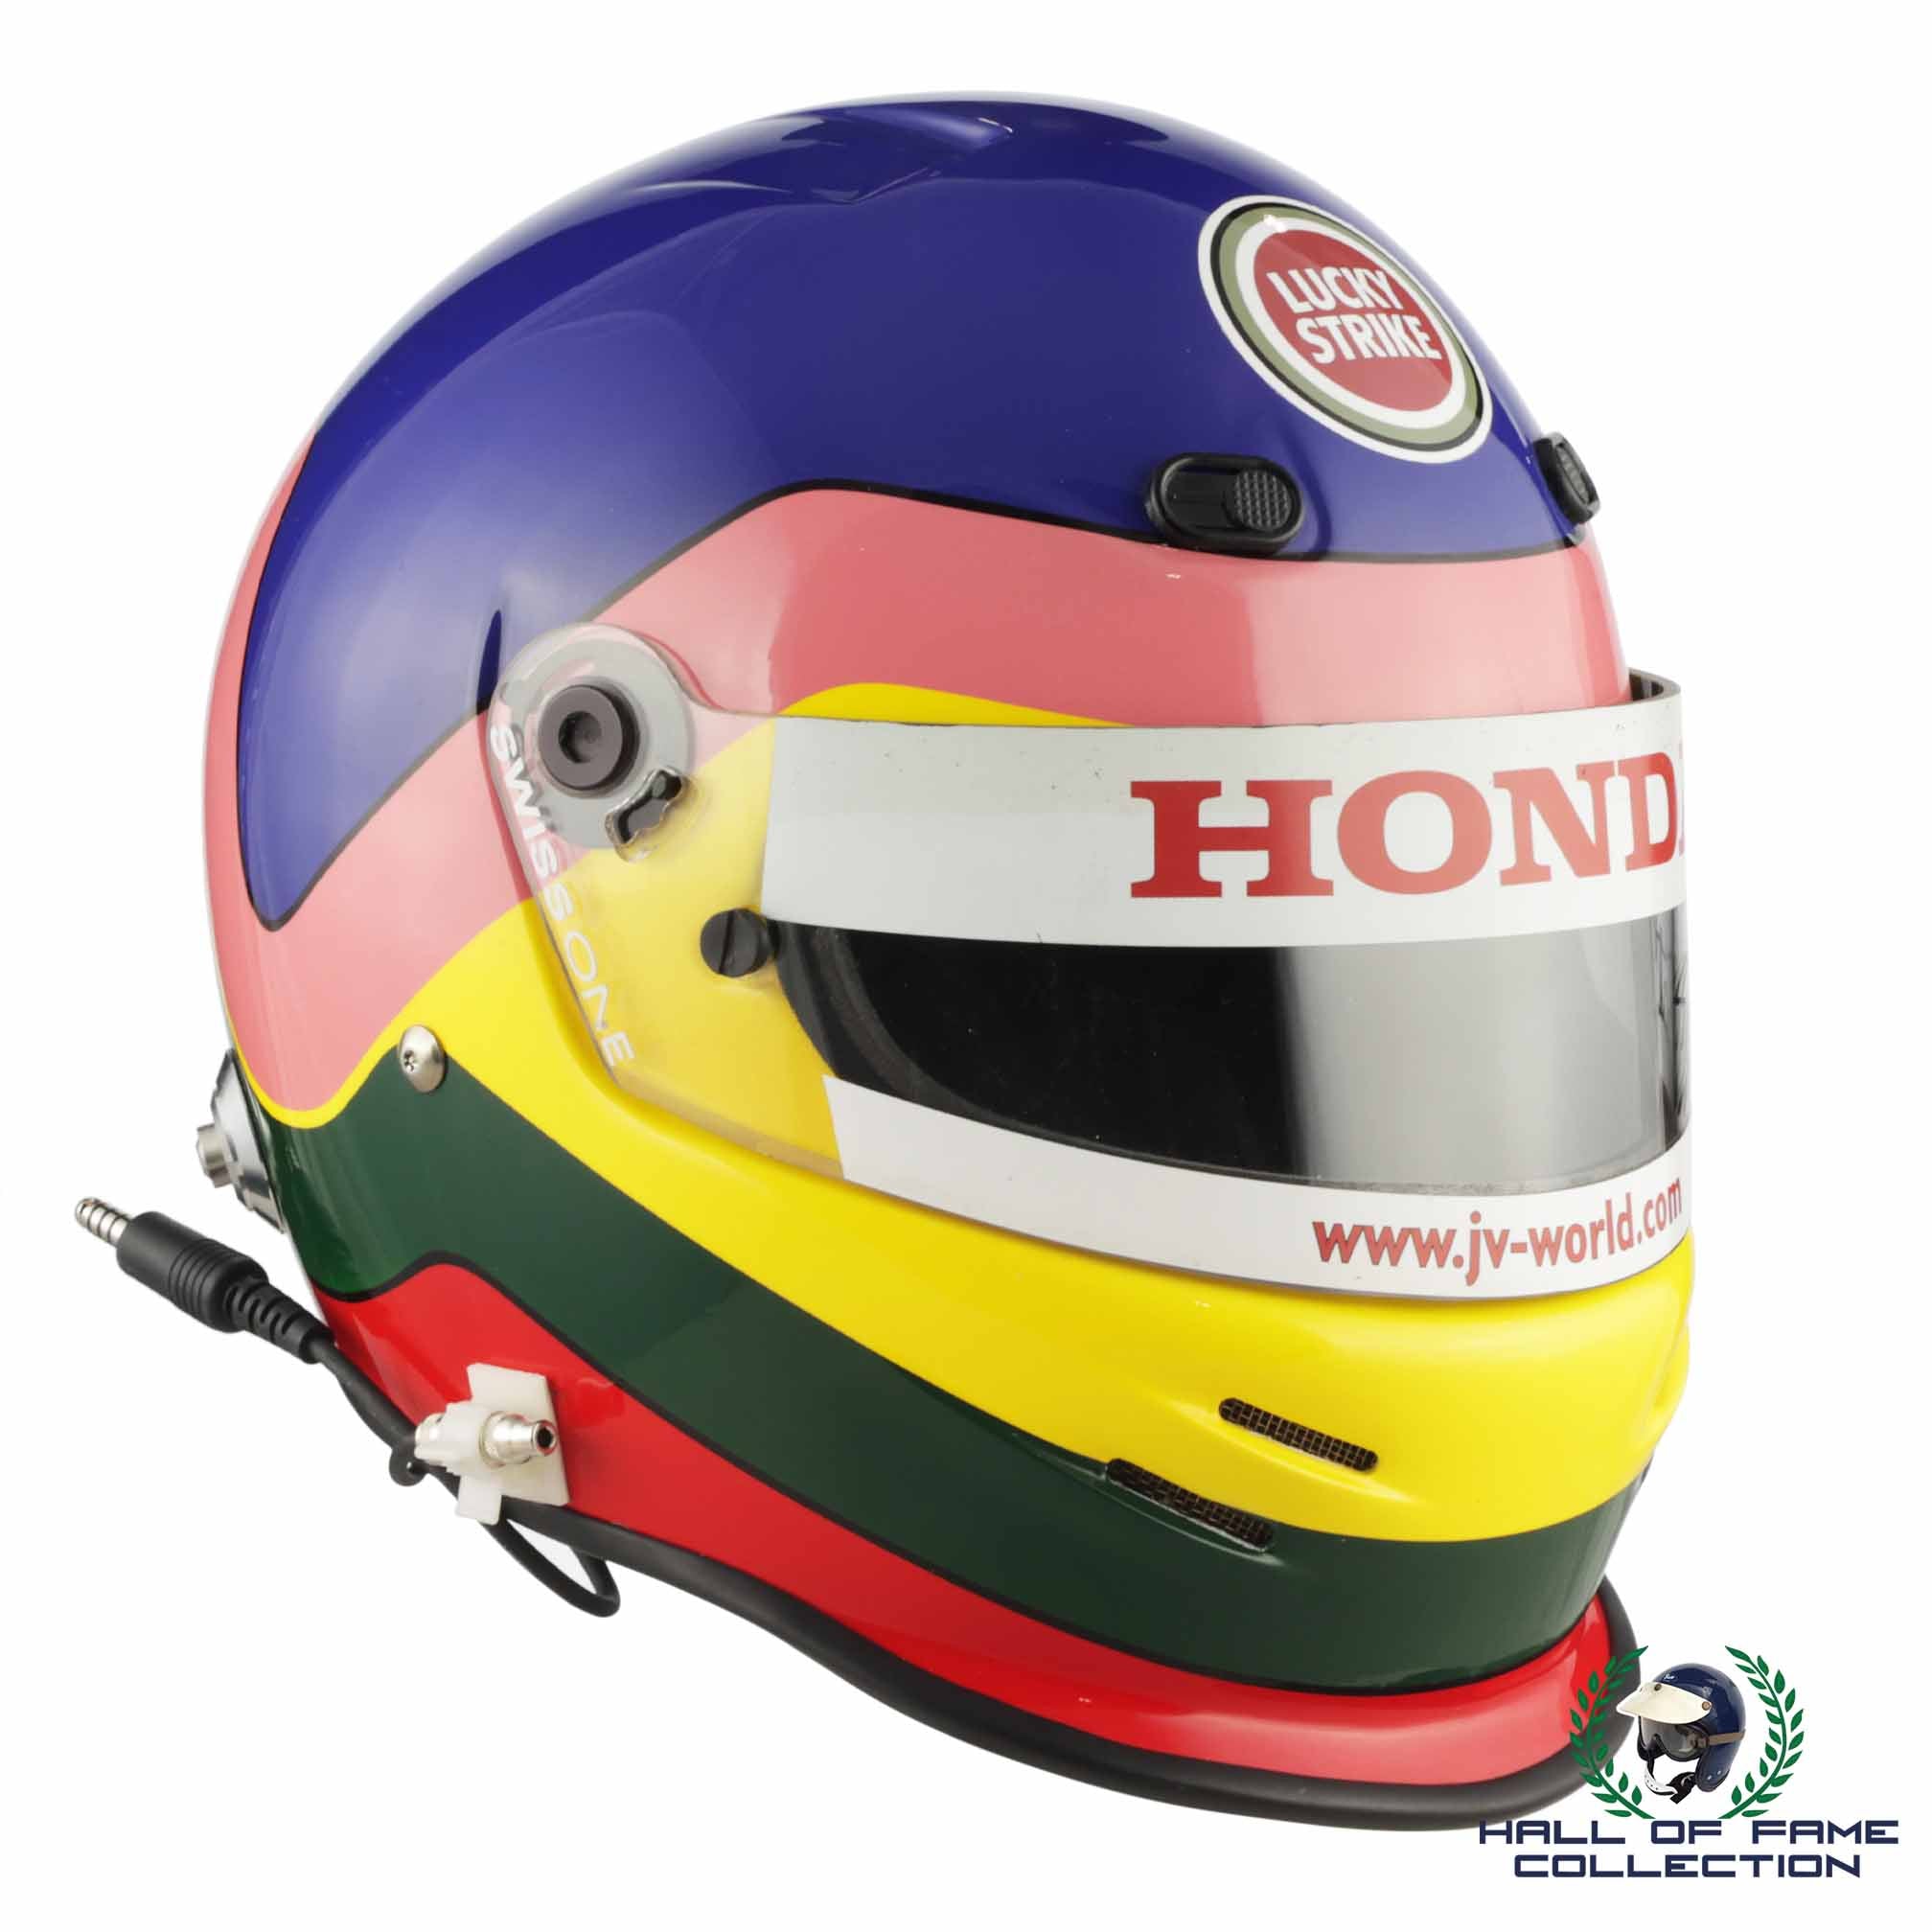 2003 Jacques Villeneuve BAR Honda Replica F1 Helmet With Signed Race Used F1 Visor